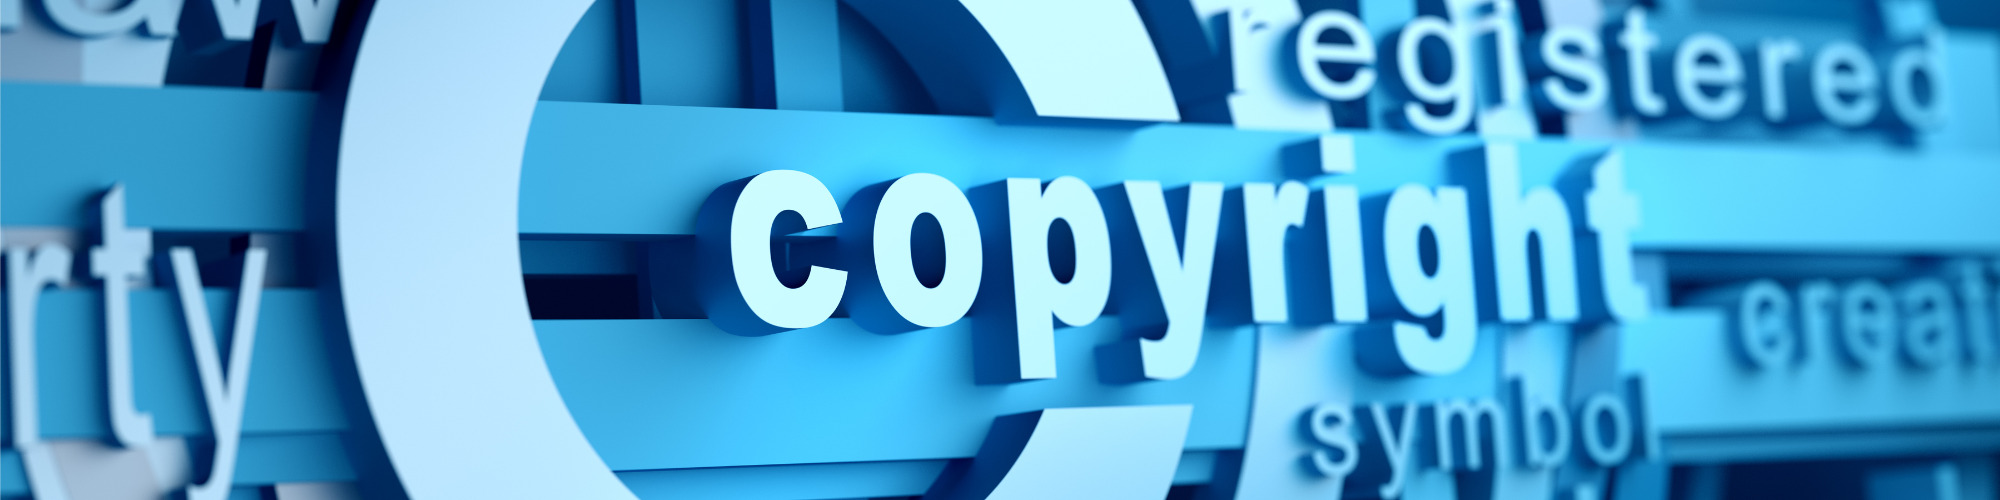 Advanced Copyright Law - Key Areas in Depth 